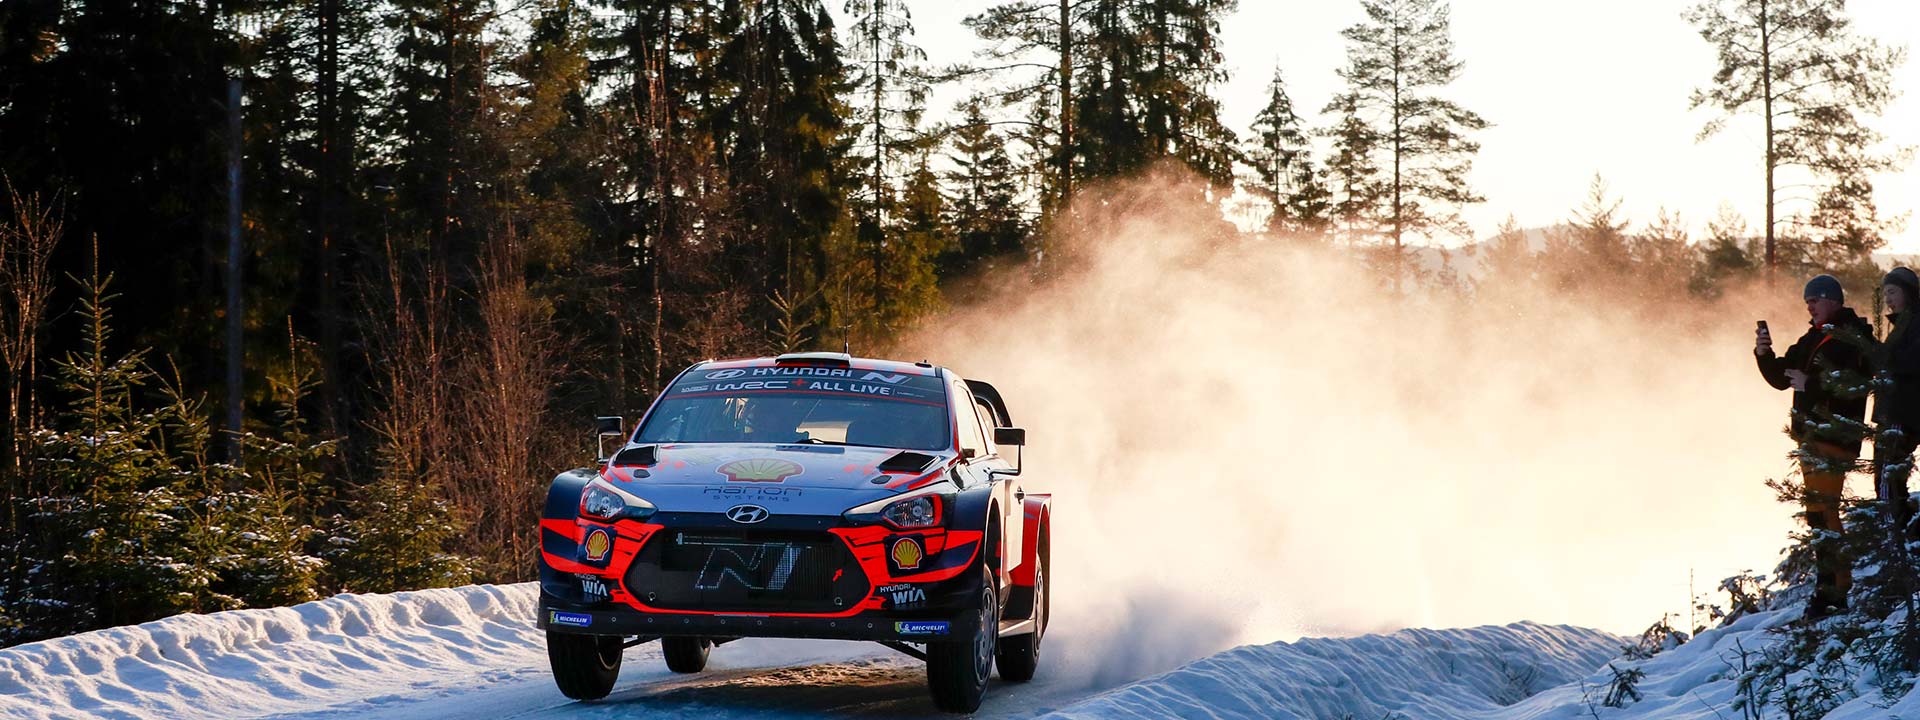 Hyundai_Motosports_Arctic-Rally-Finland_i20-coupe_header_1920x720.jpg